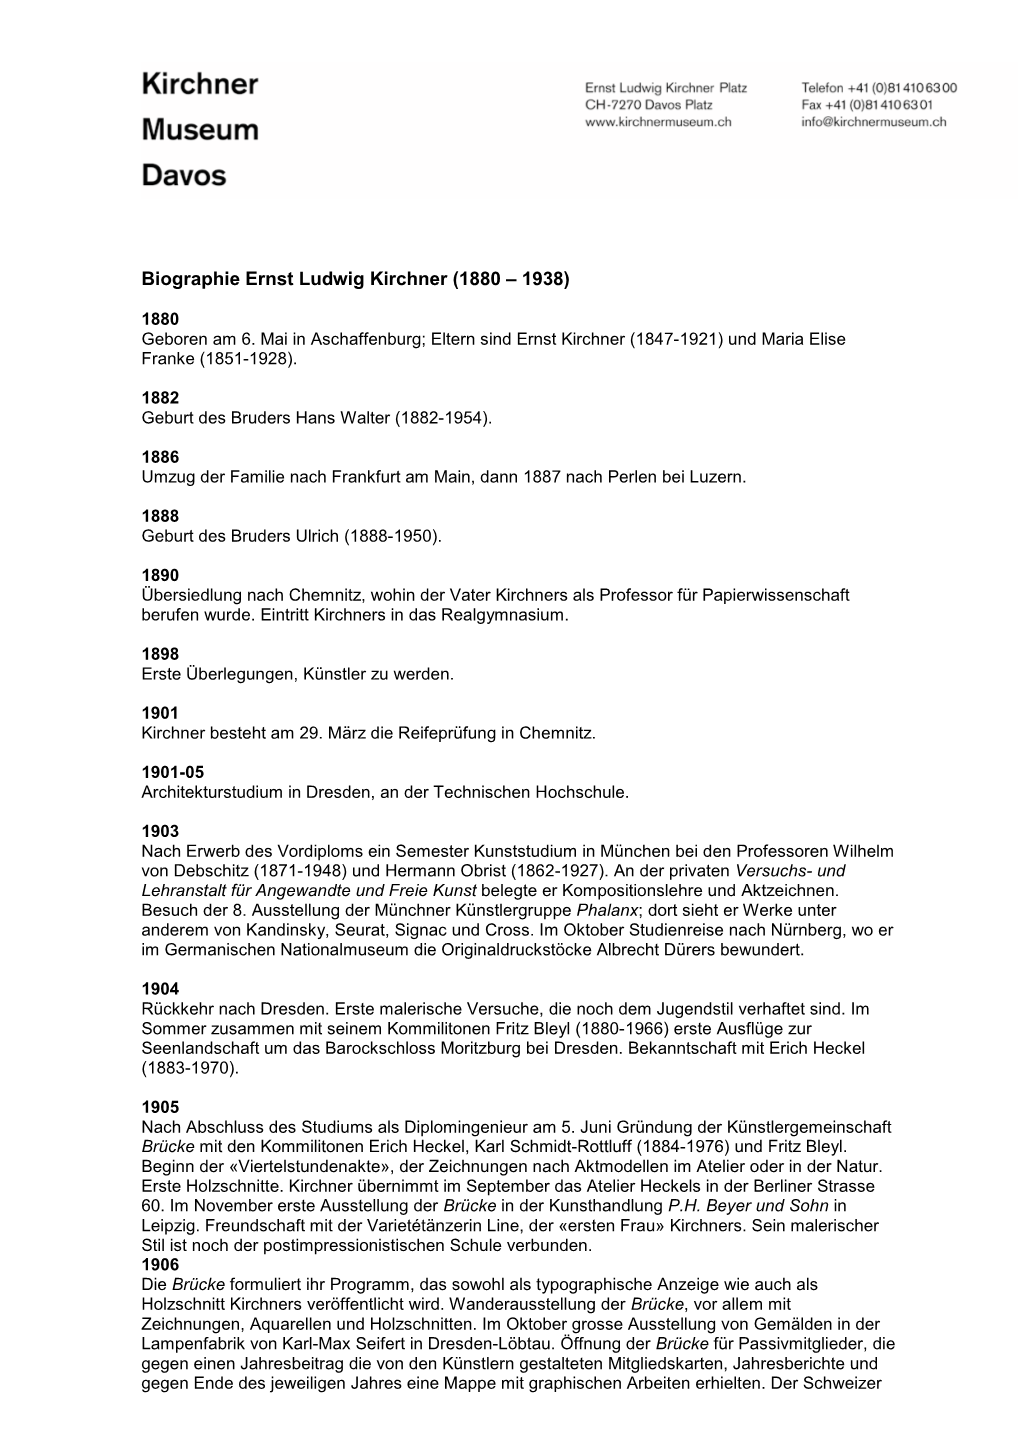 Biographie Ernst Ludwig Kirchner (1880 – 1938)